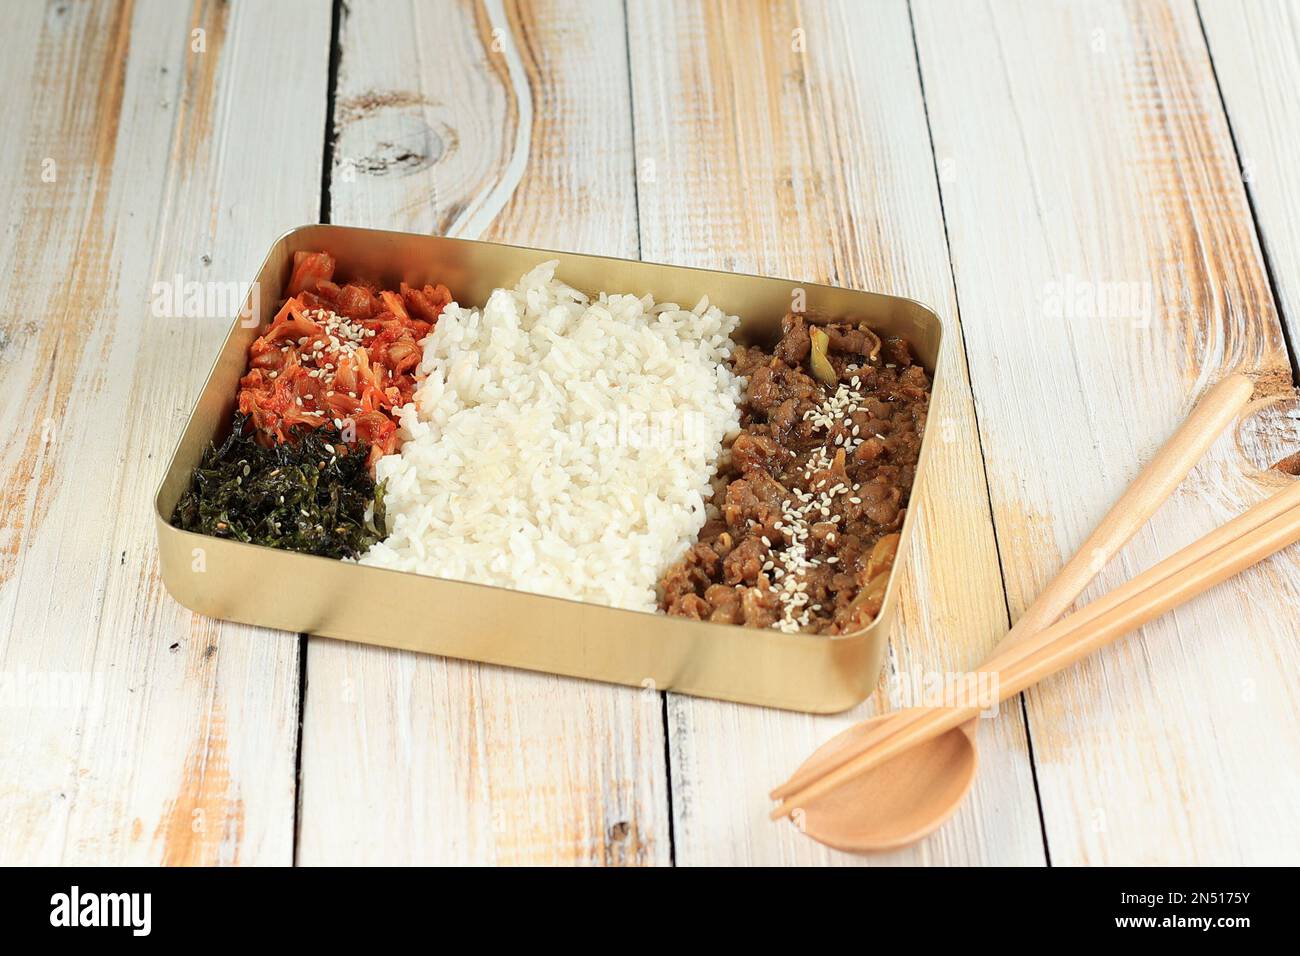 Dosirak Korean Lunch Box Contain Steamed Rice with Gyeranmari